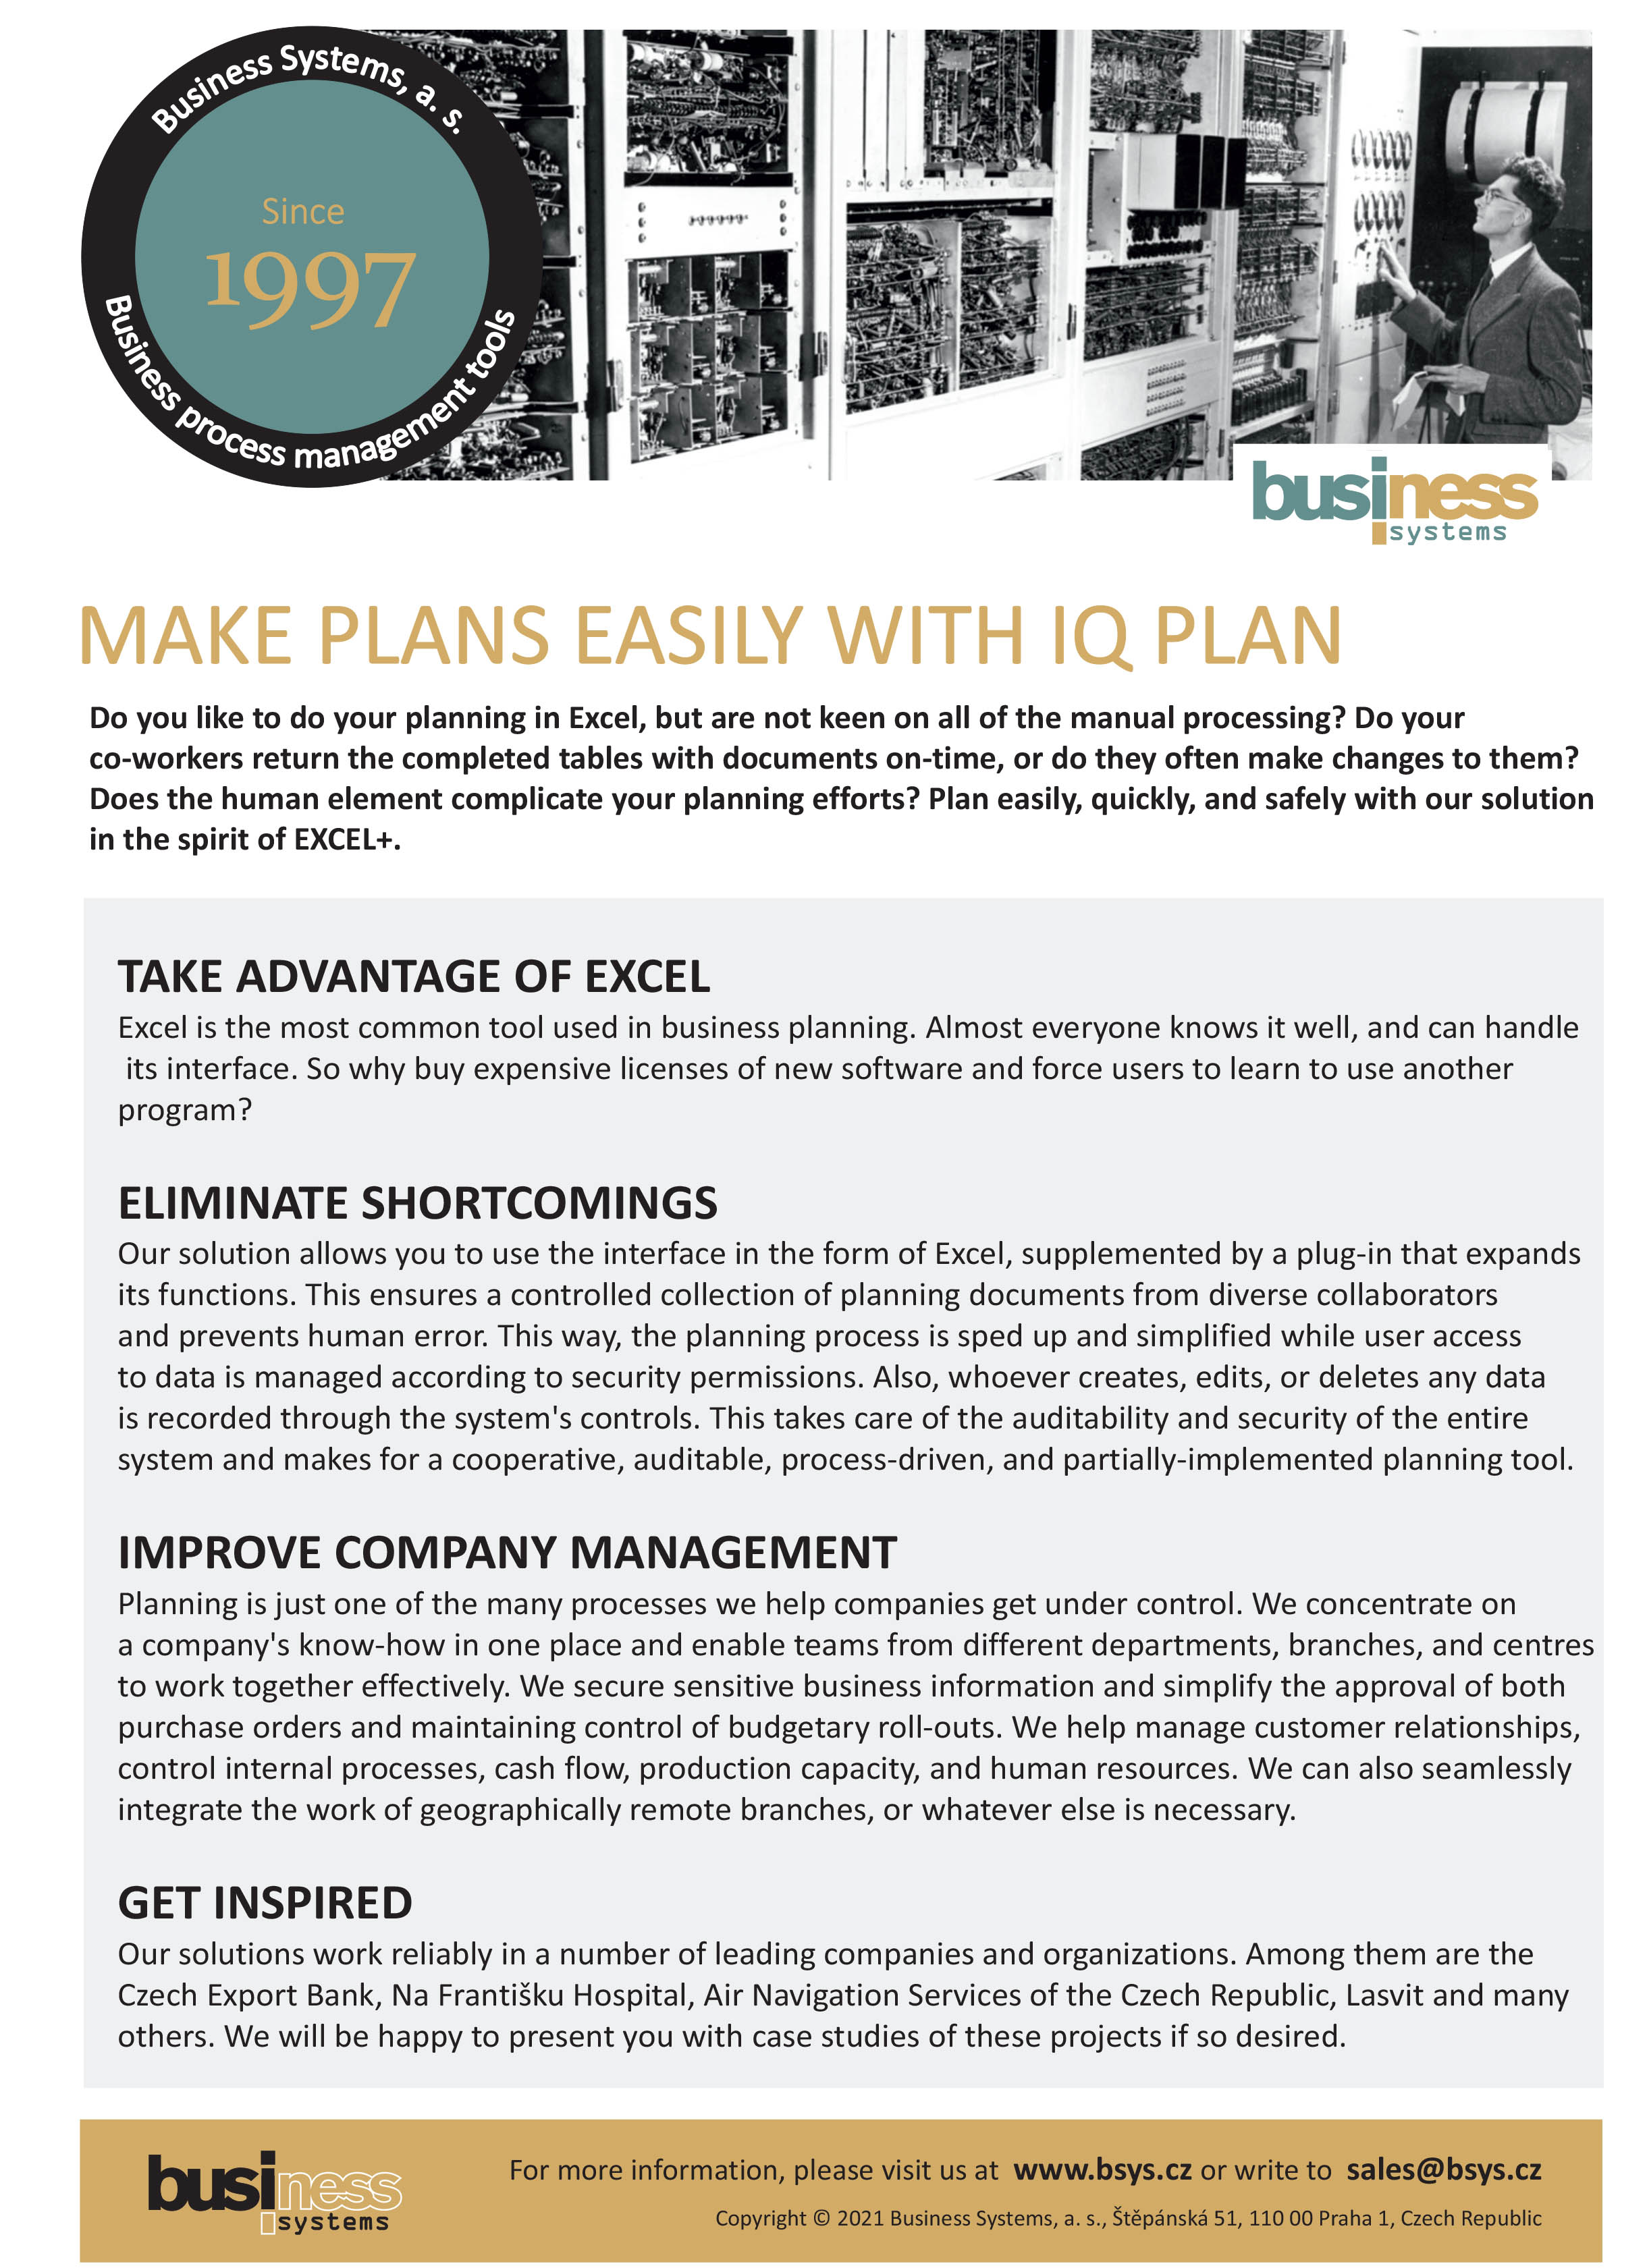 IQ Plan - corporate planning